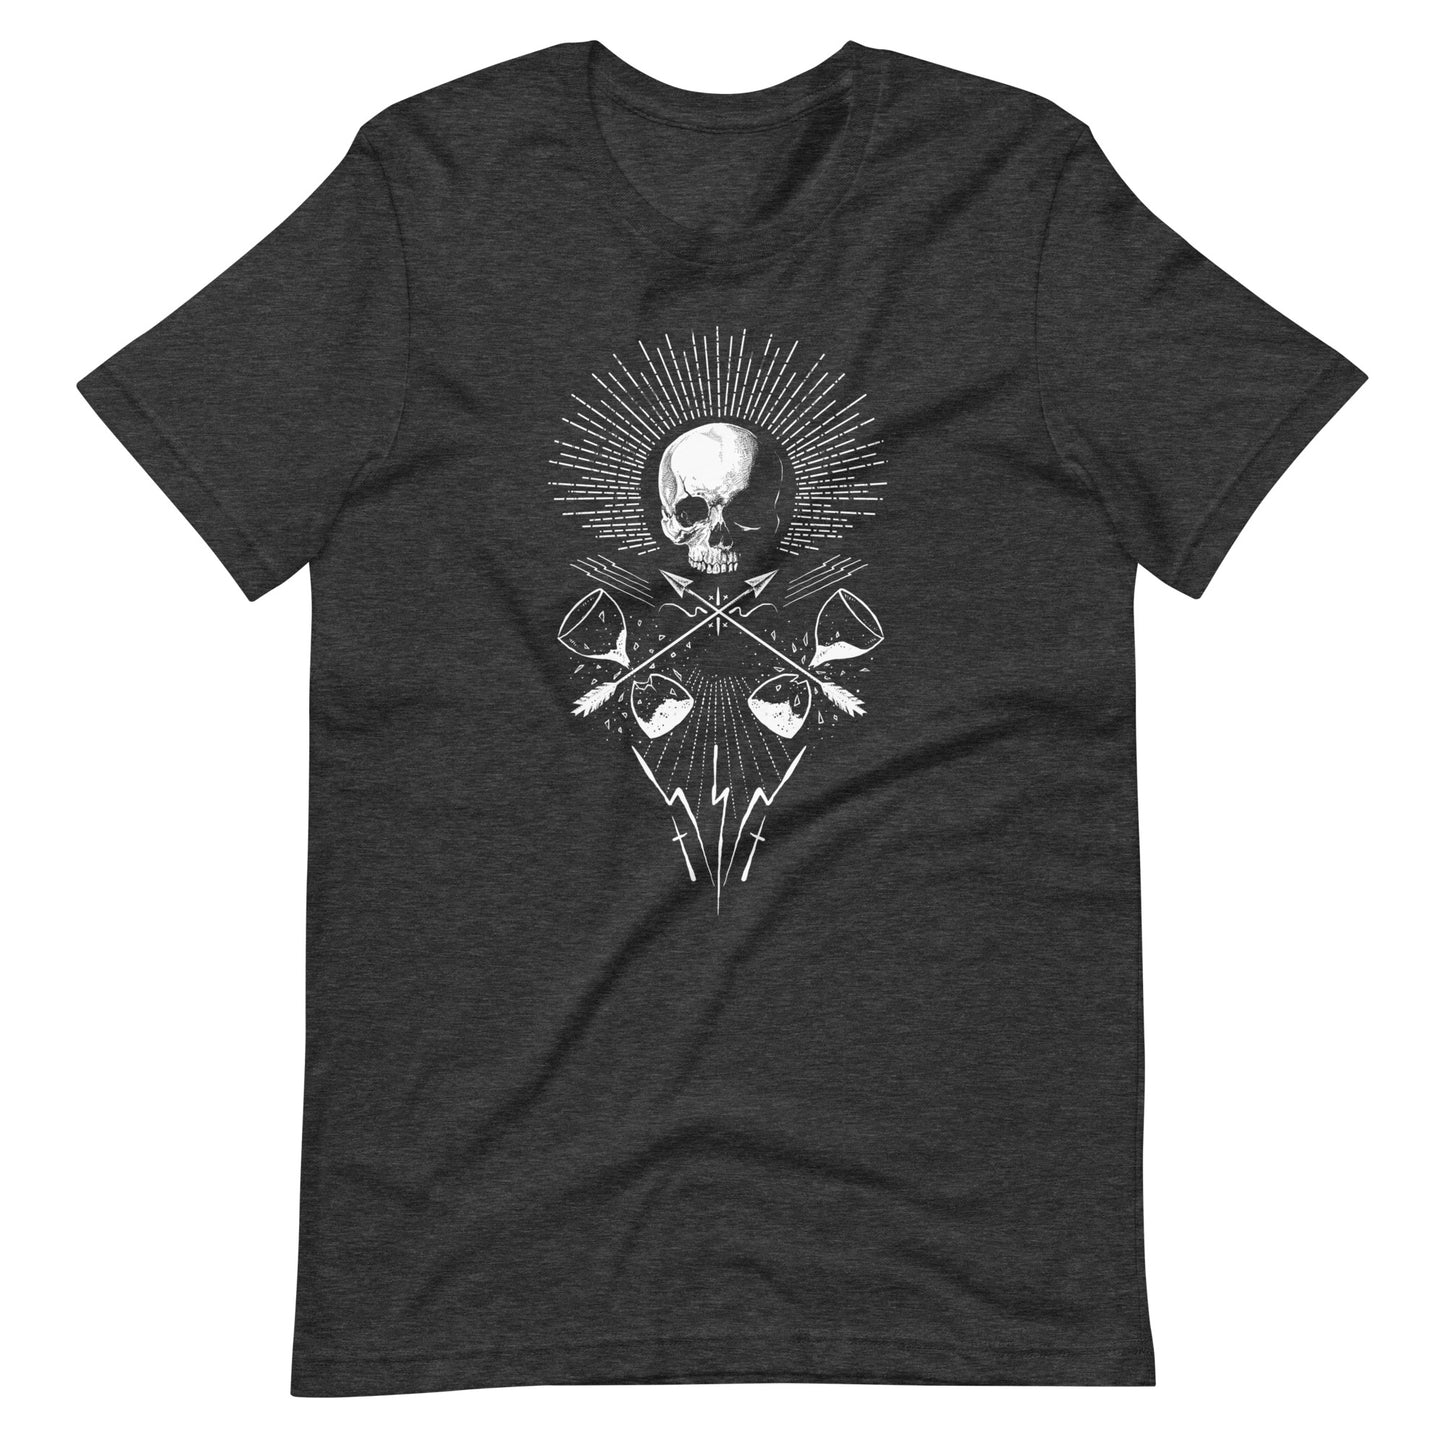 For the Sake of Future - Men's t-shirt - Dark Grey Heather Front